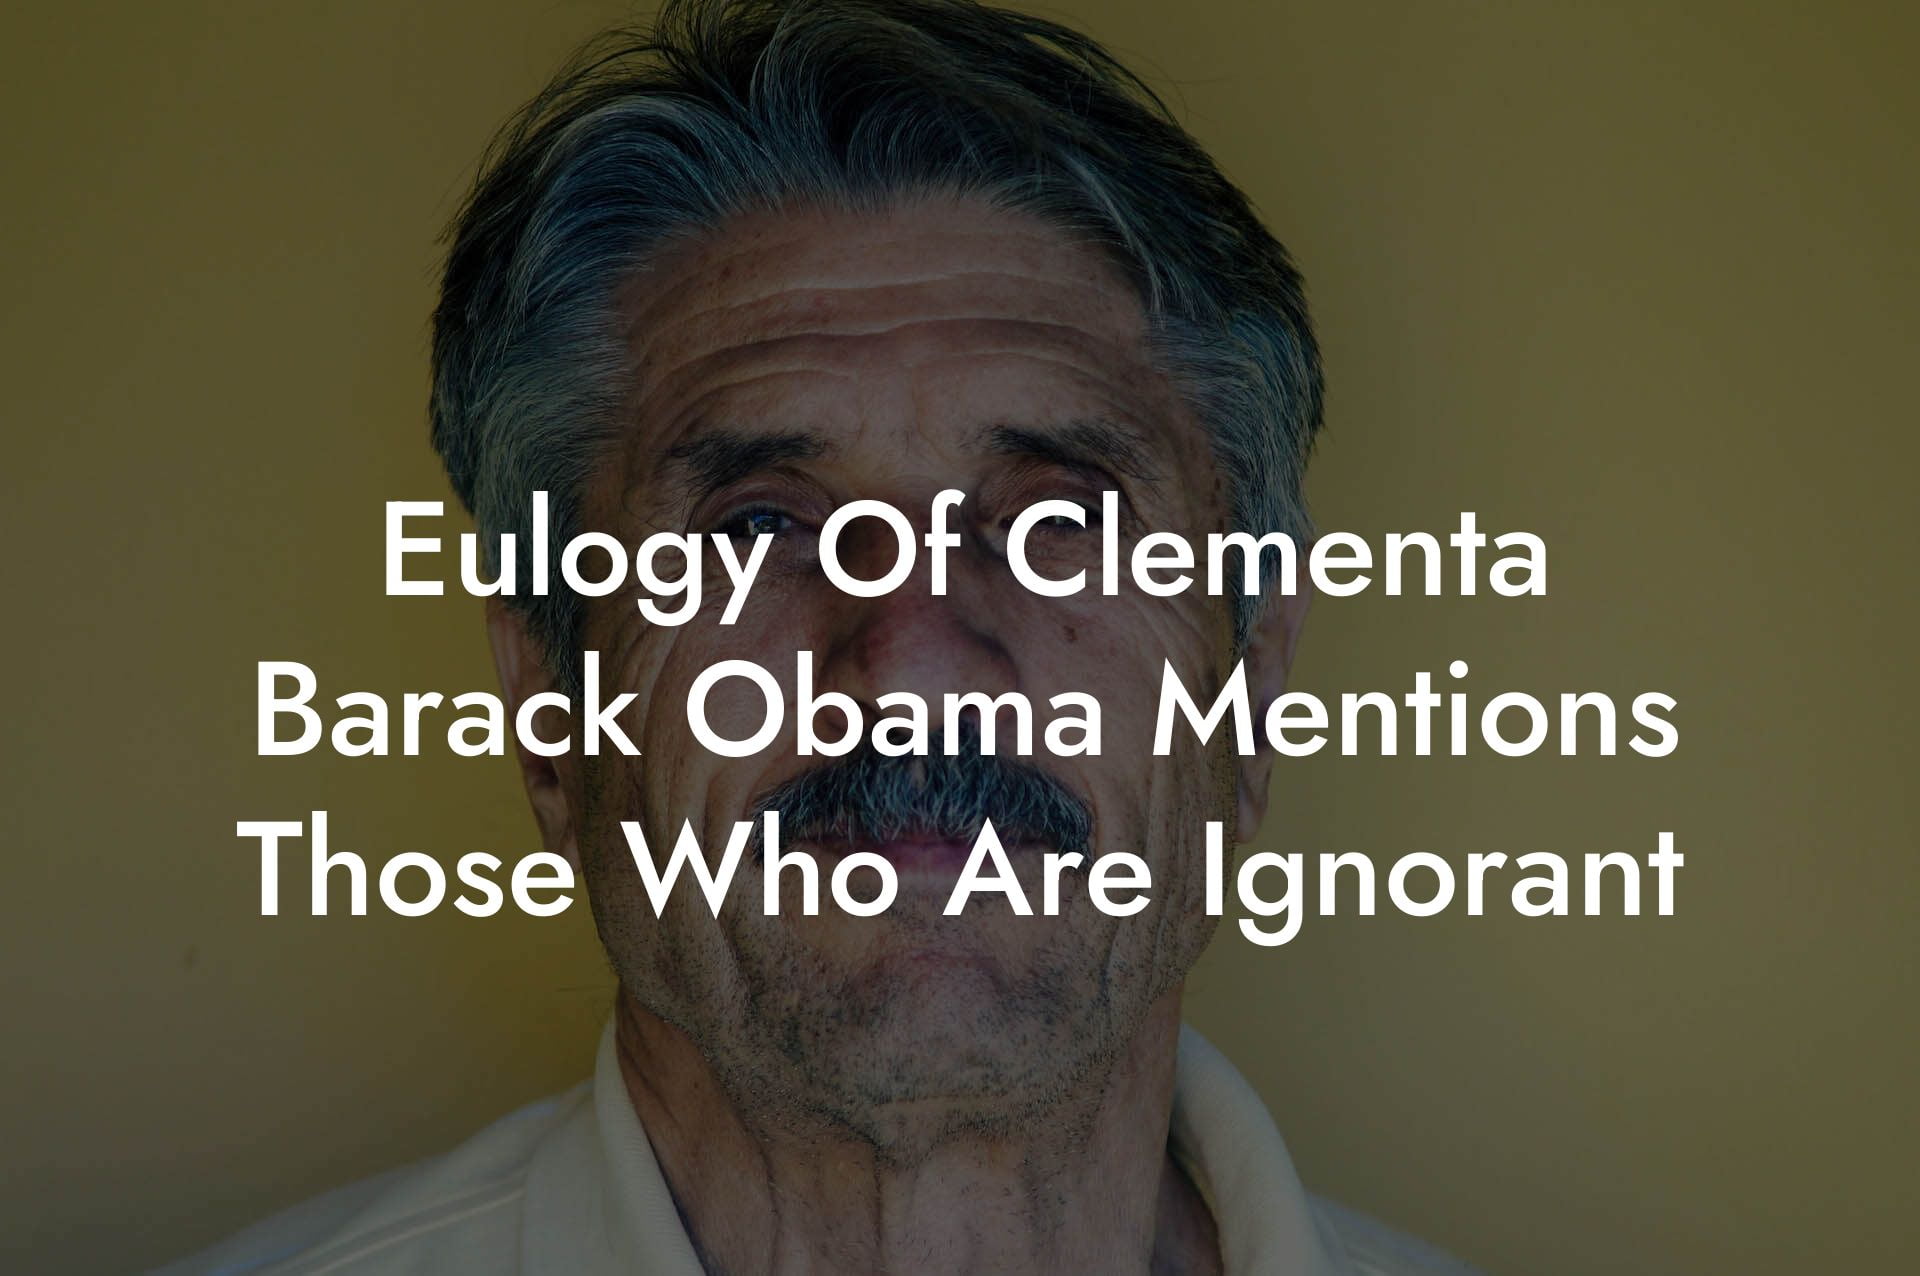 Eulogy Of Clementa Barack Obama Mentions Those Who Are Ignorant